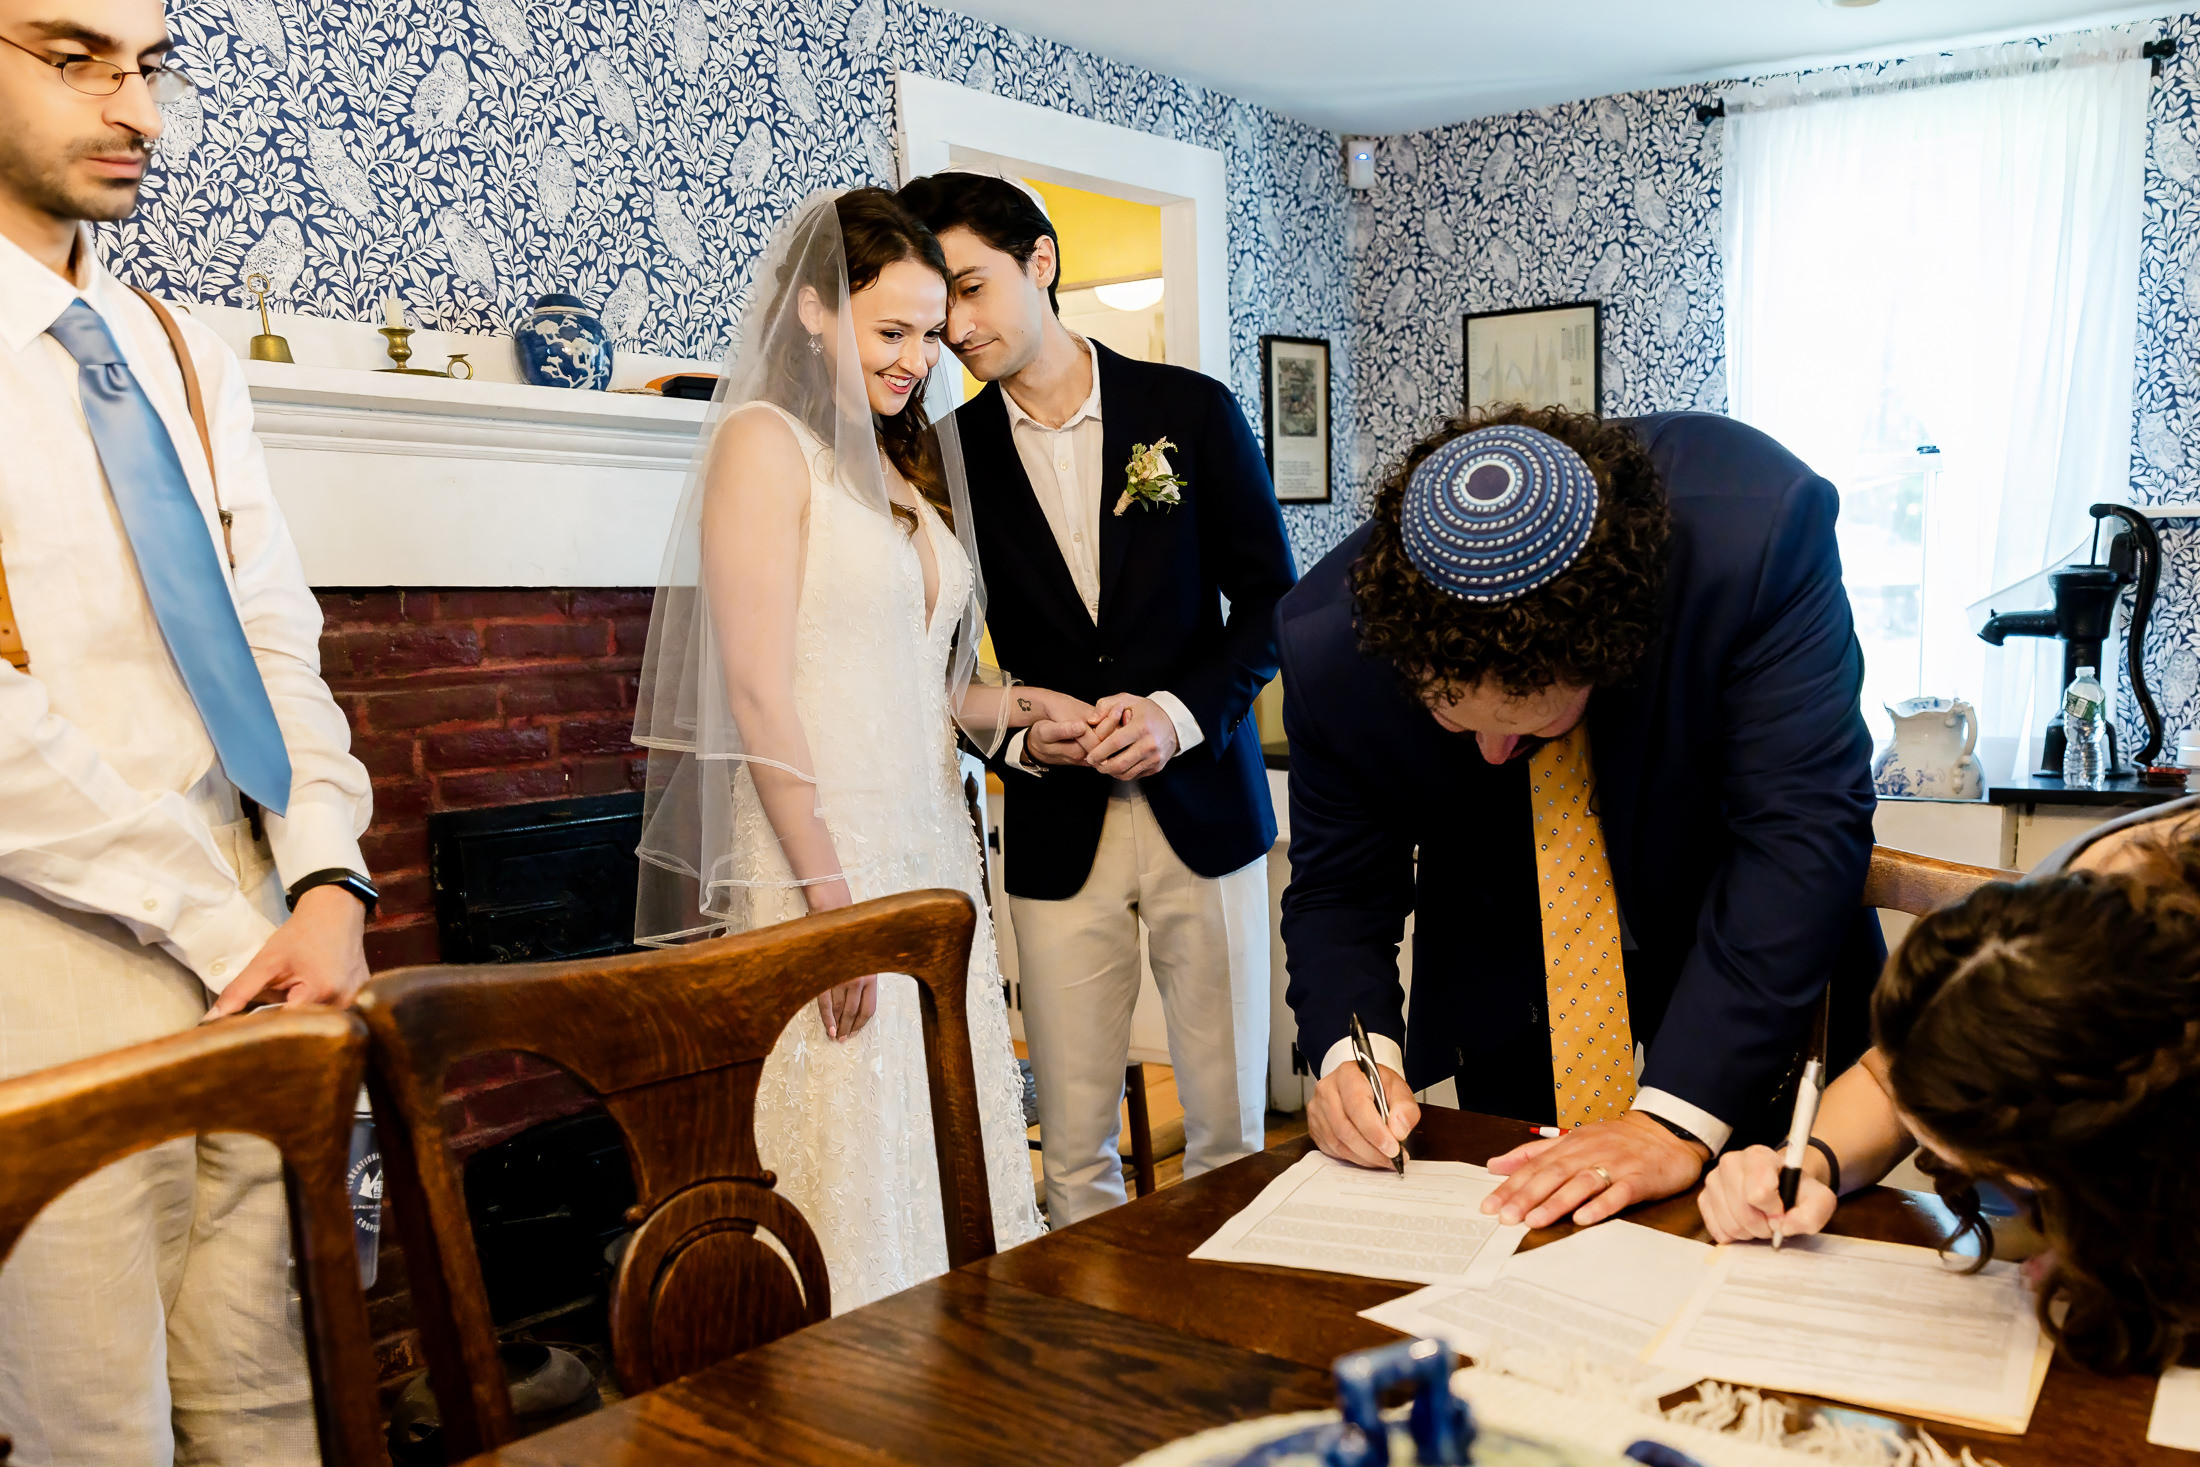 Ketuhbah signing at Monson Maine wedding